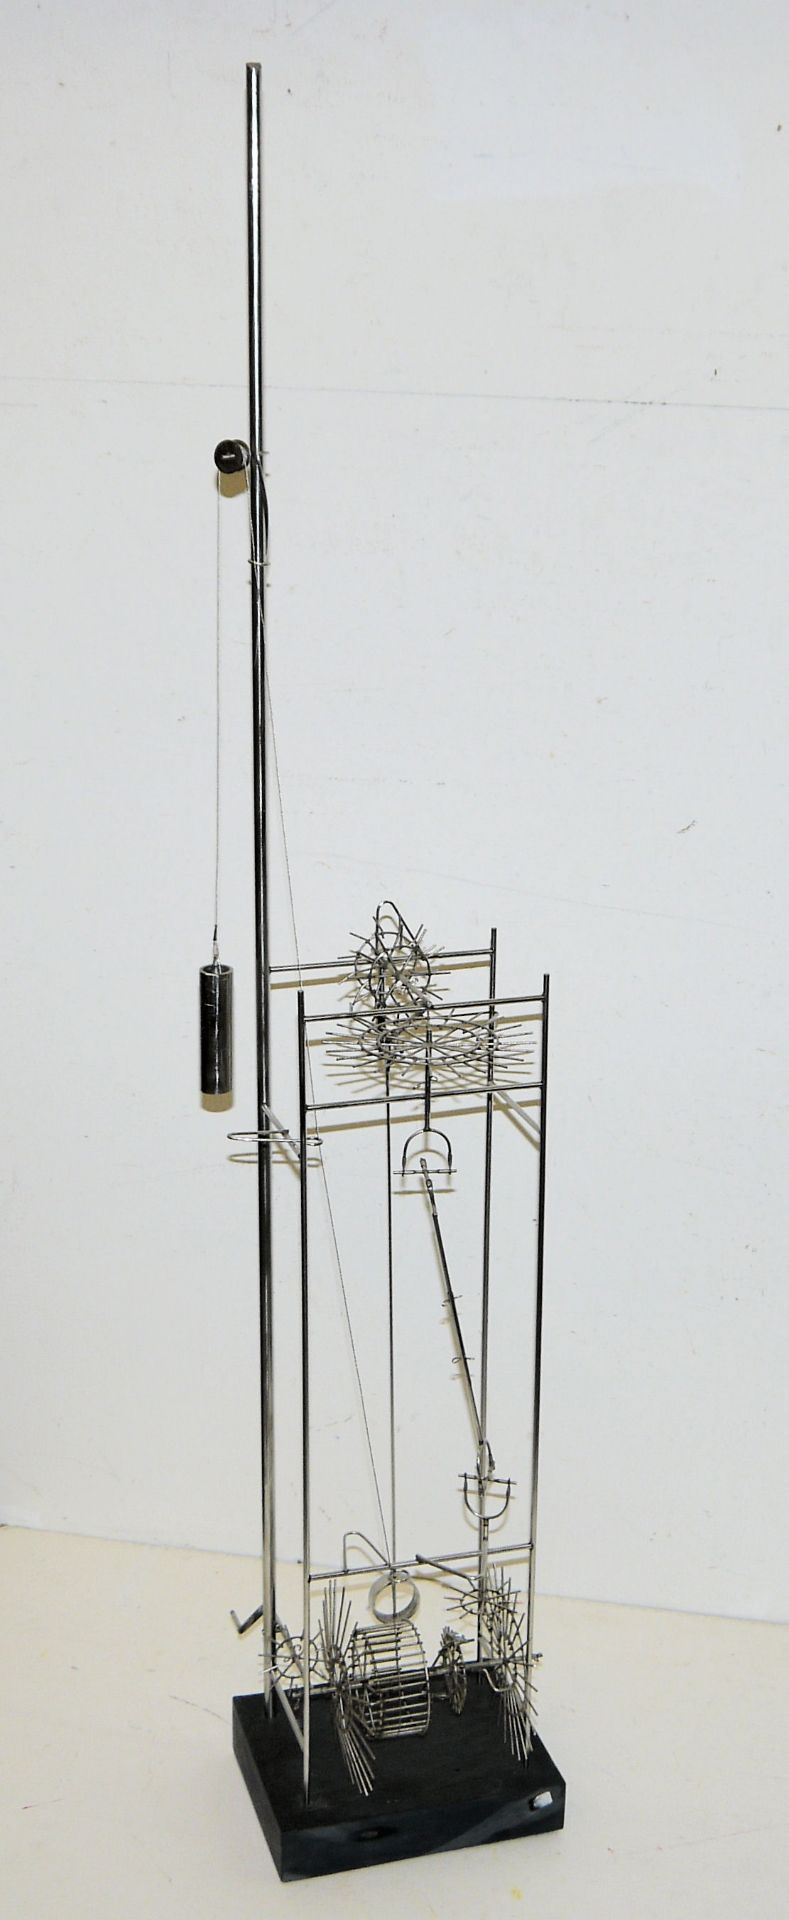 Ernst Reinold, "Lustmechanik", kinetic object from 1990